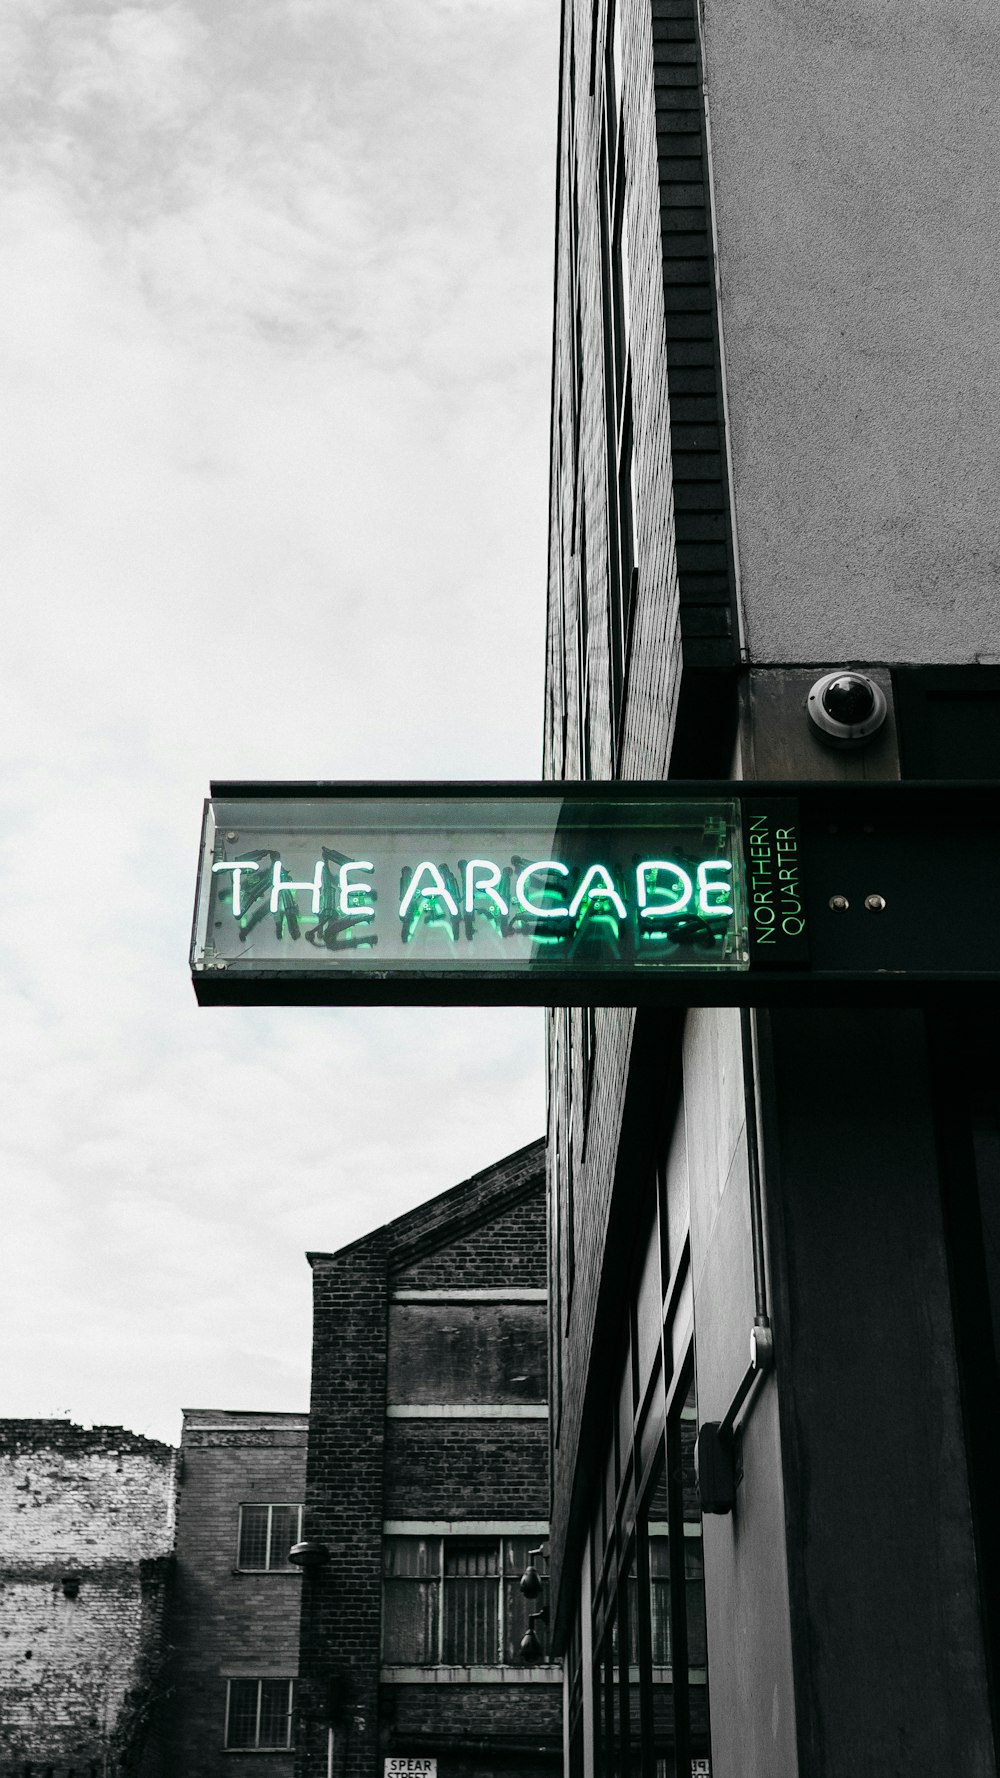 The Arcade signage